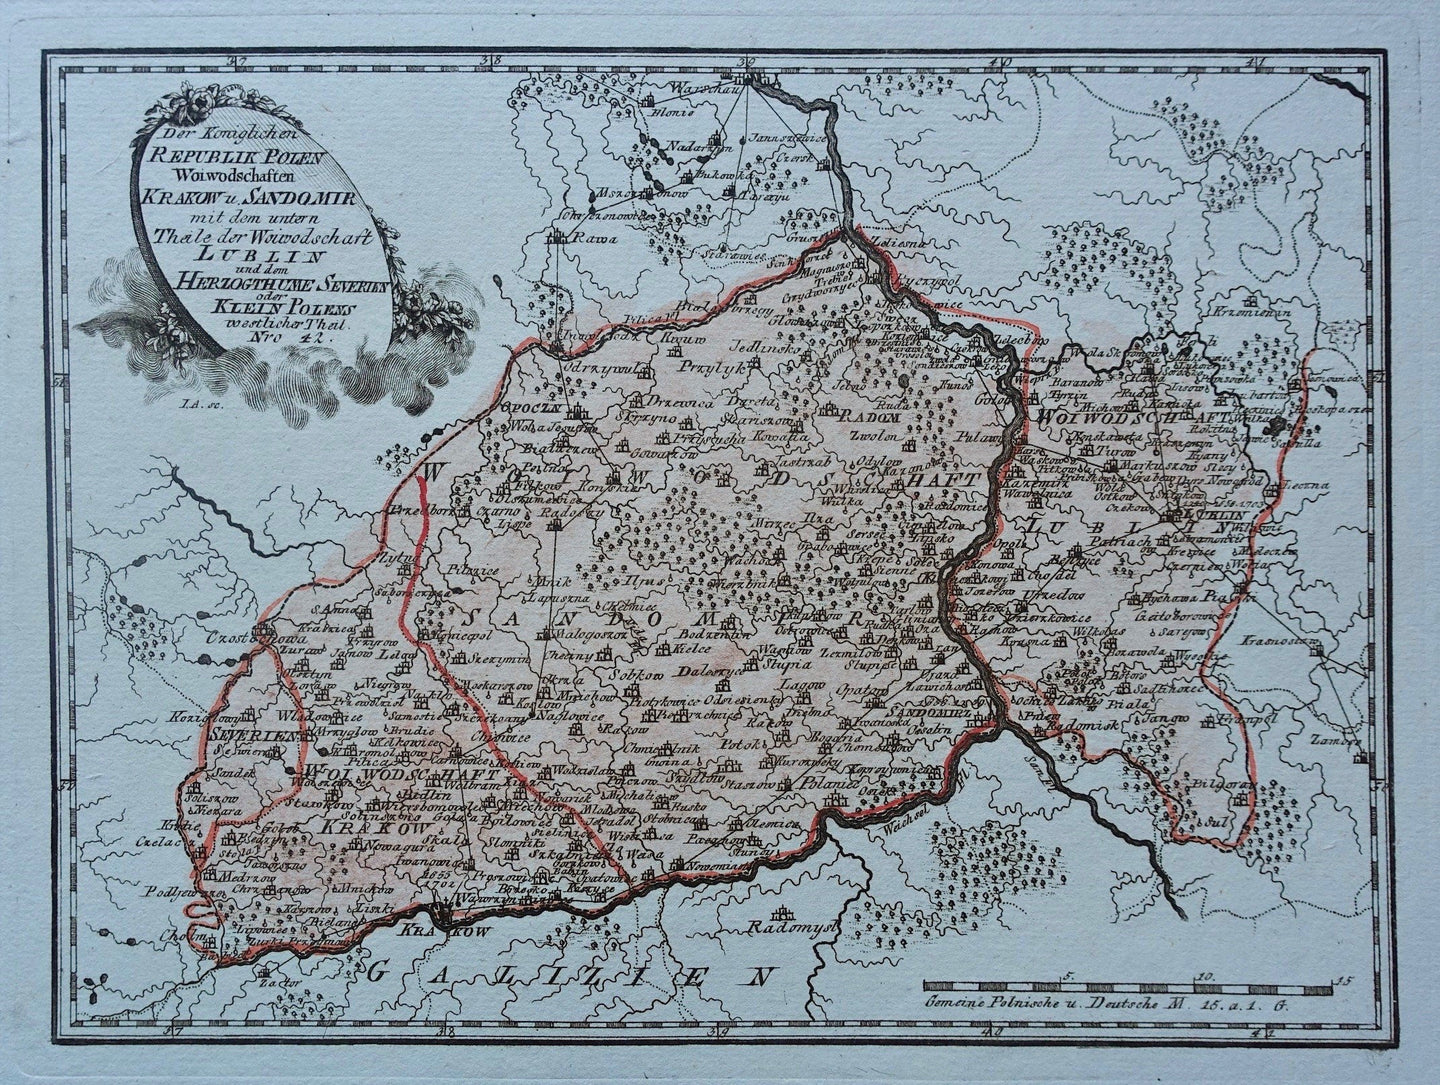 Polen Krakau Krakow Radom Lublin Poland - FJJ von Reilly - 1790